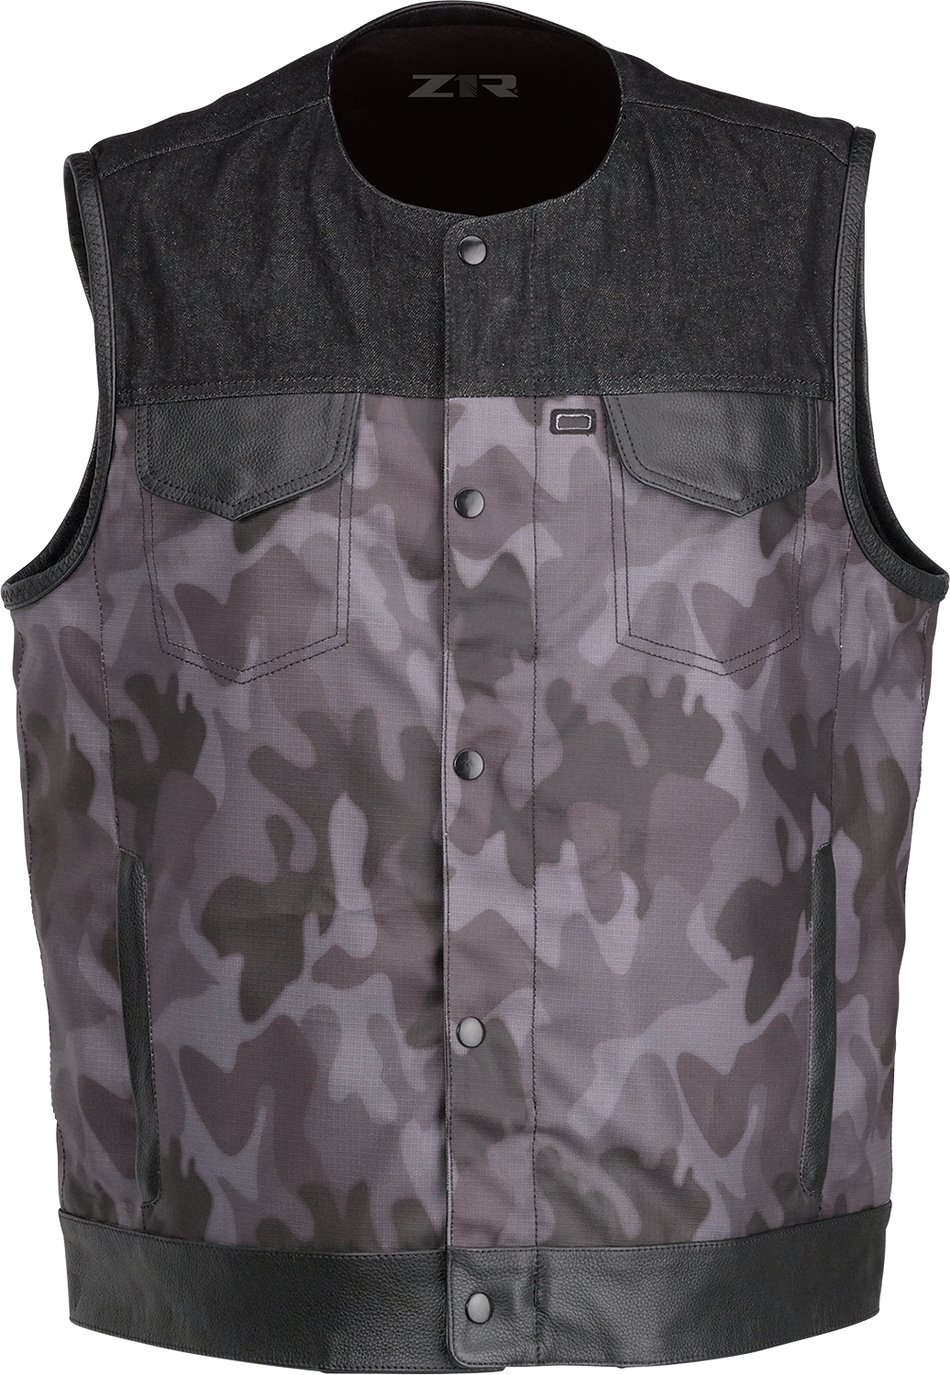 Z1R Nightfire Camo Vest - Black/Gray - 4XL 2830-0630